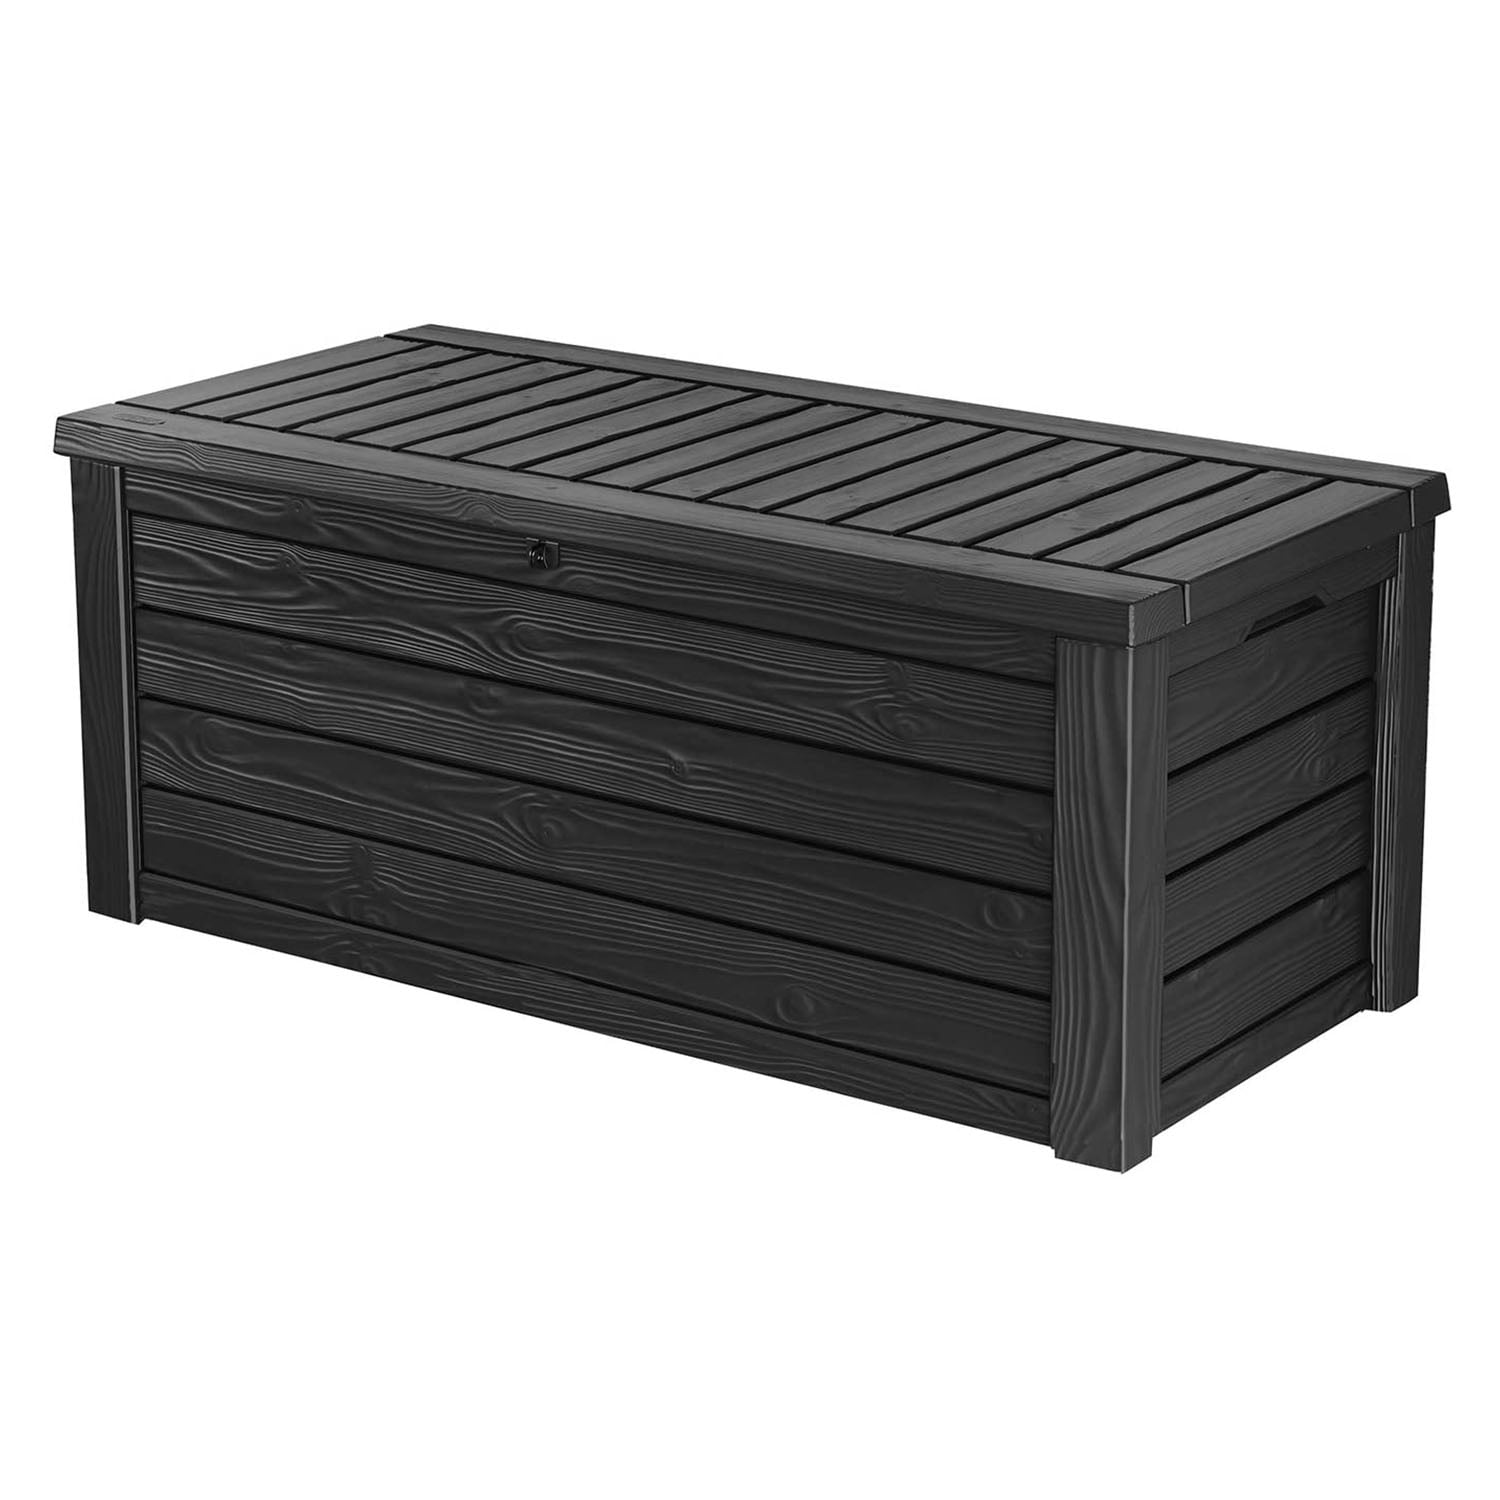 Java Brown Plastic Development Group 130-Gallon Outdoor Storage Patio Deck Box 